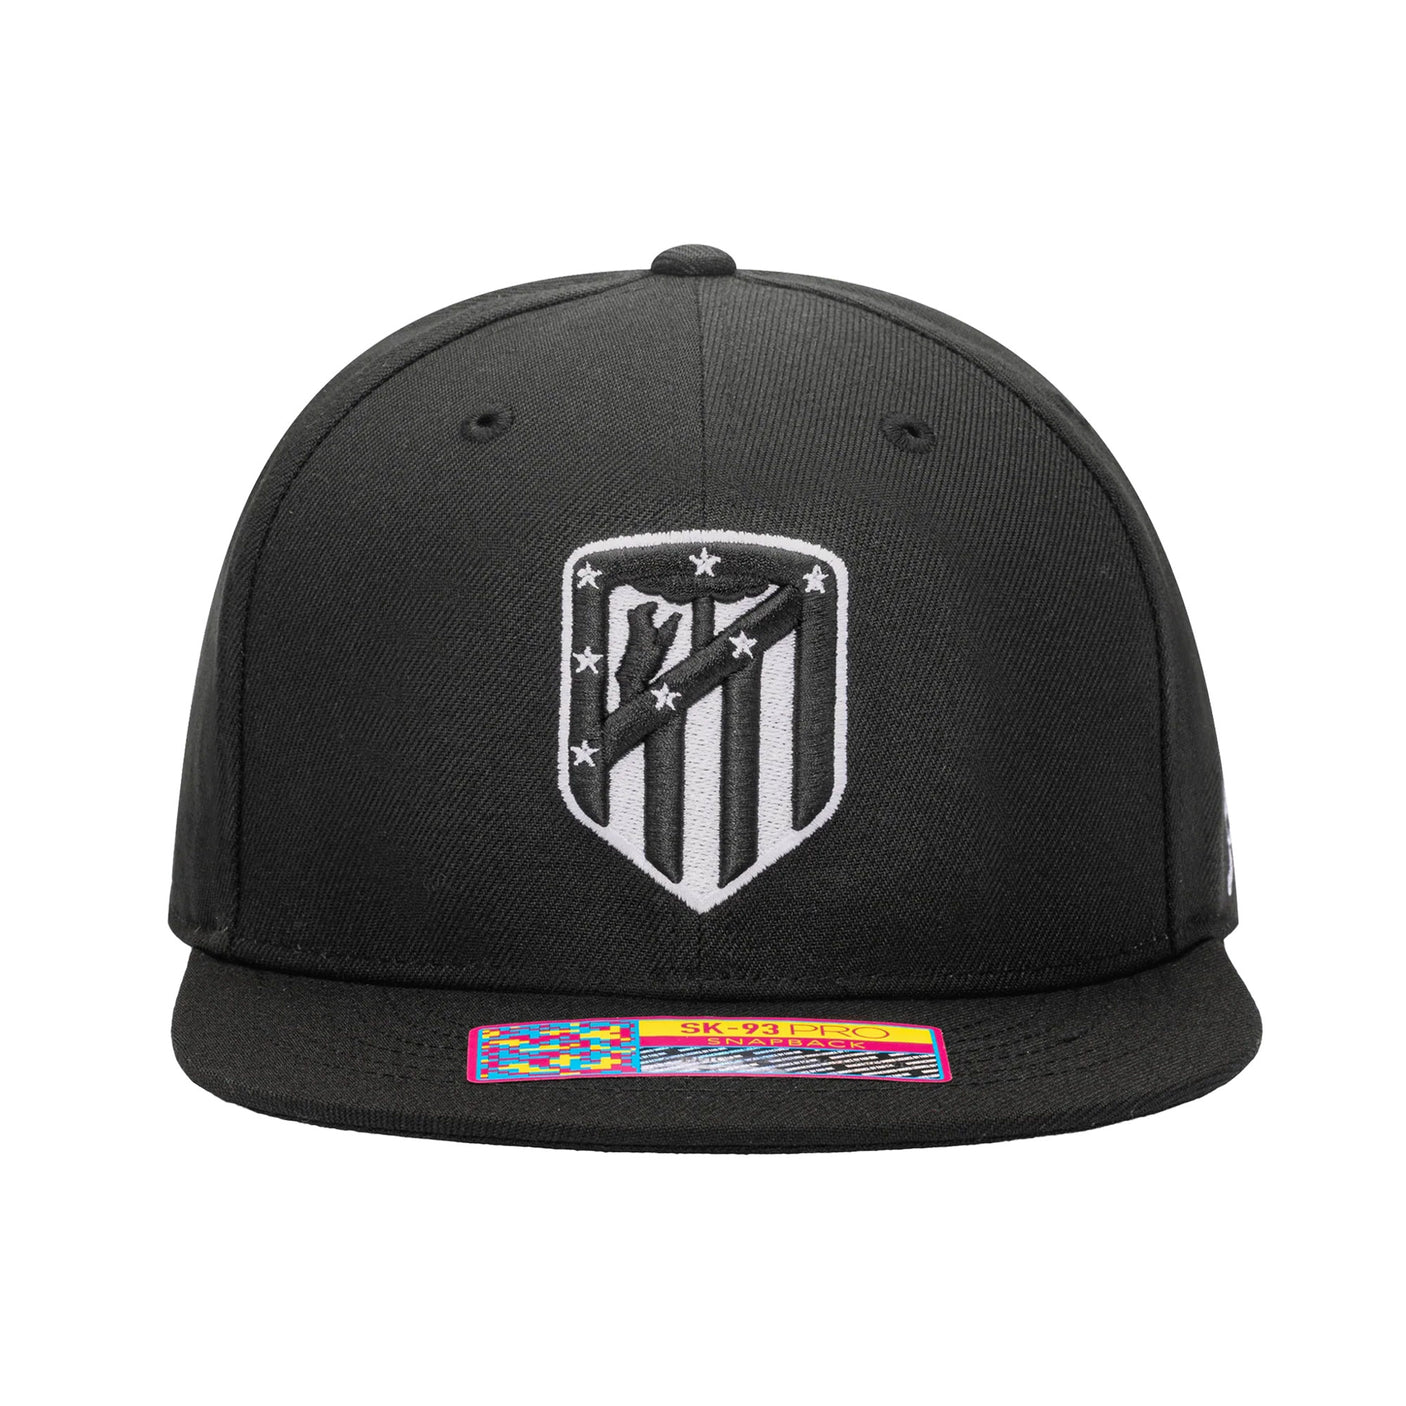 Fan Ink Atletico Madrid Snap Back Hat Black/Silver Front